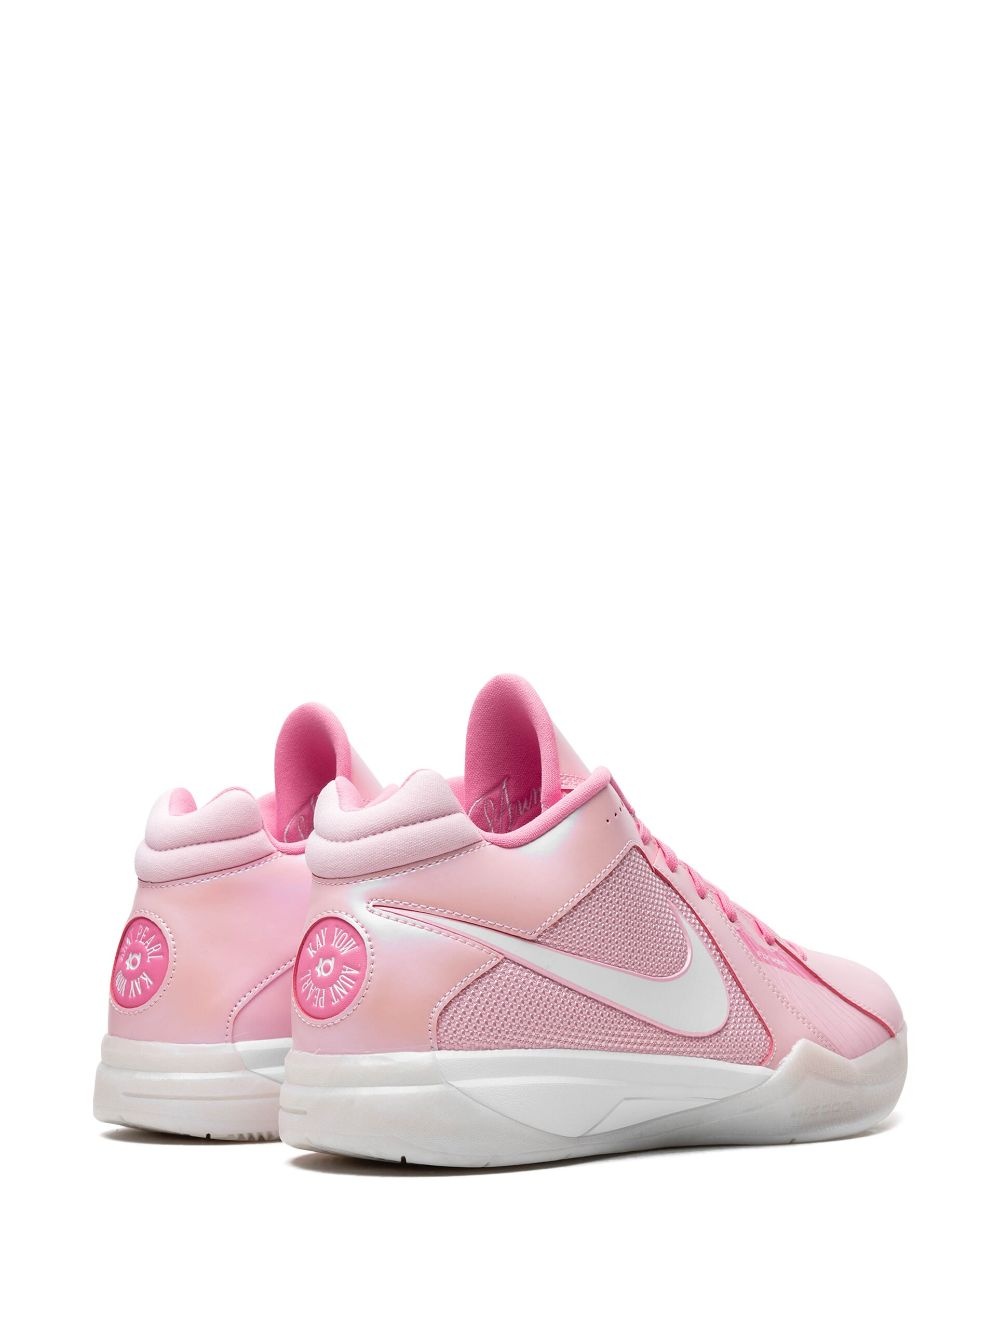 KD 3 "Aunt Pearl" sneakers - 3